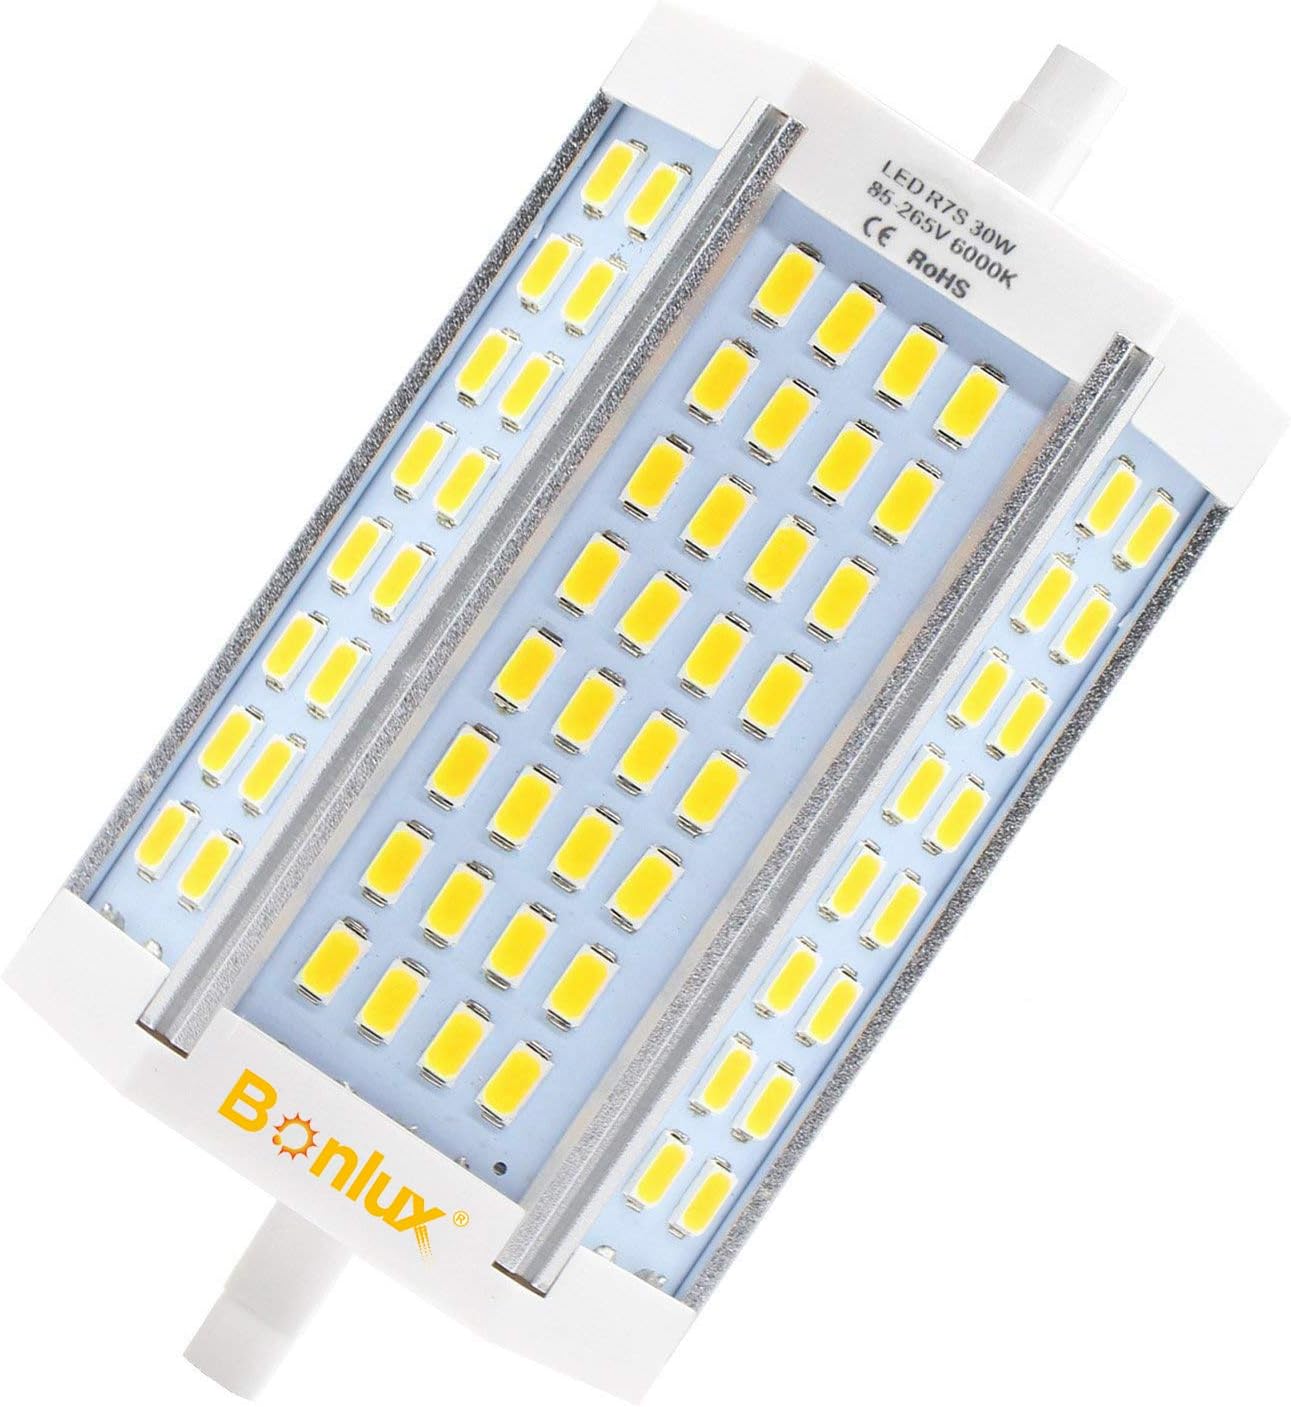 Bonlux Dimmbar 30W R7s LED Lampe Kühlweiß 6000K